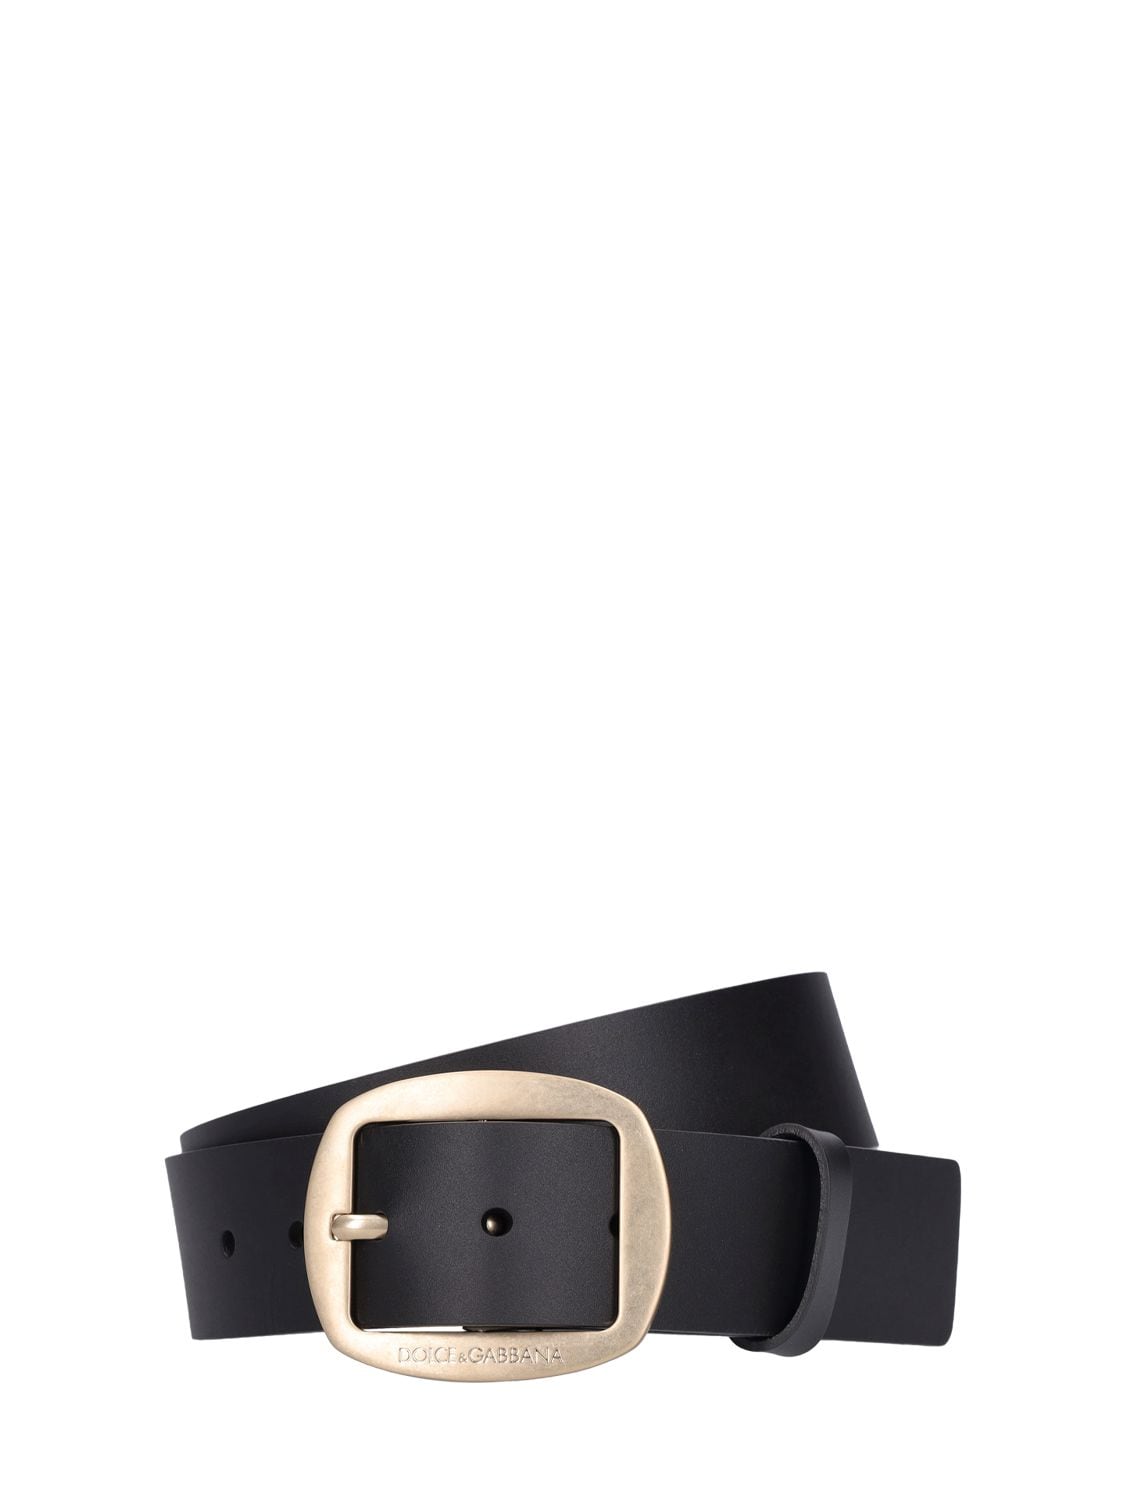 Dolce & Gabbana 4cm Leather Belt In Black